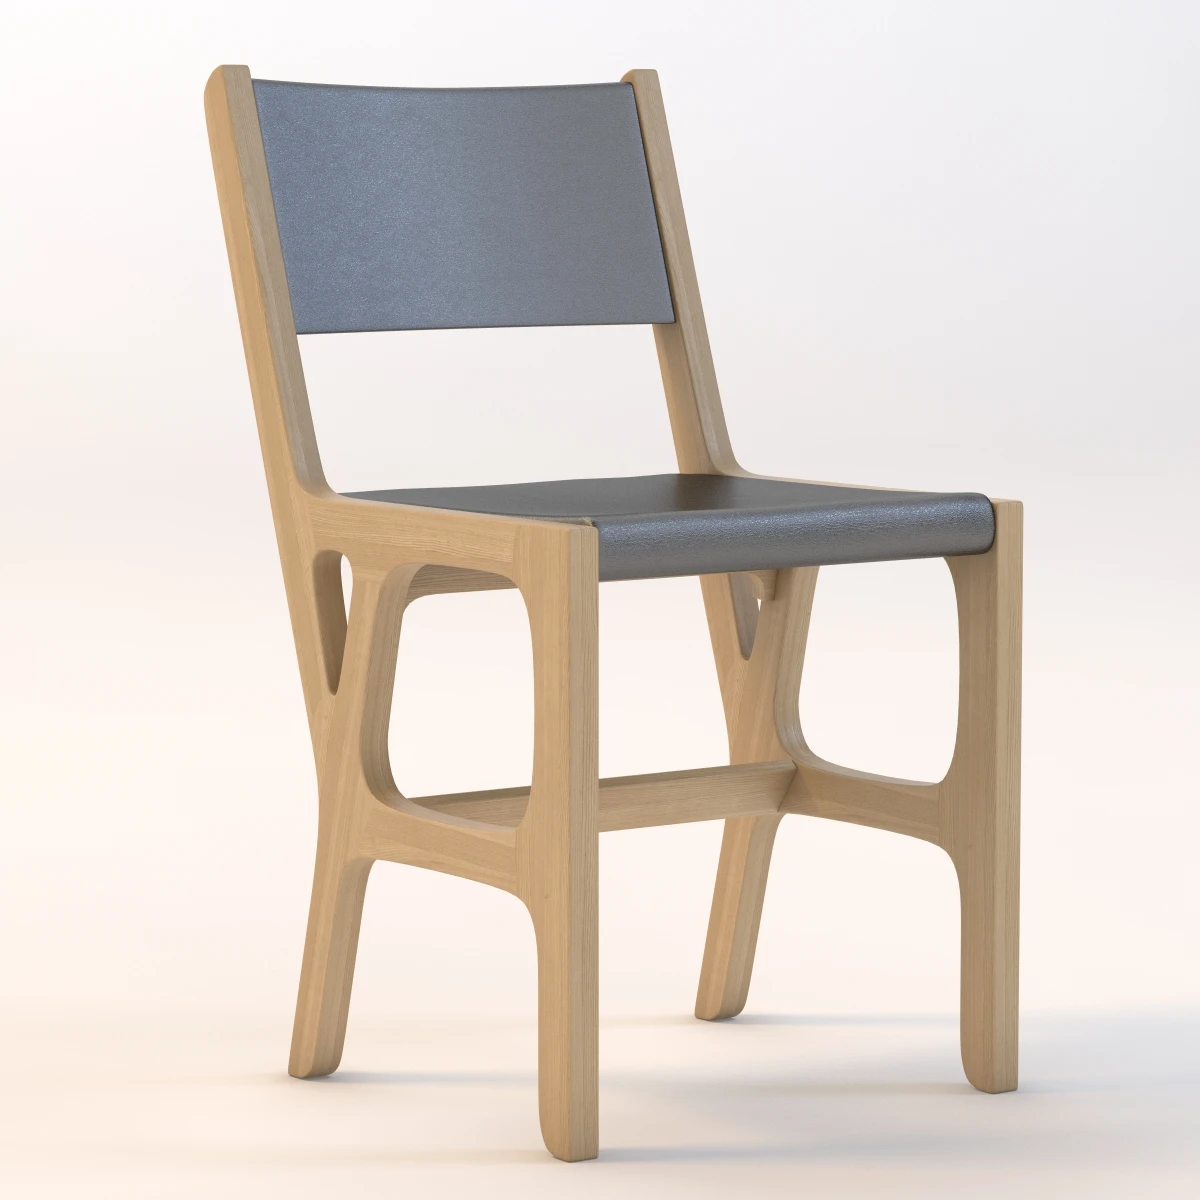 Kahve Chair 3D Model_01